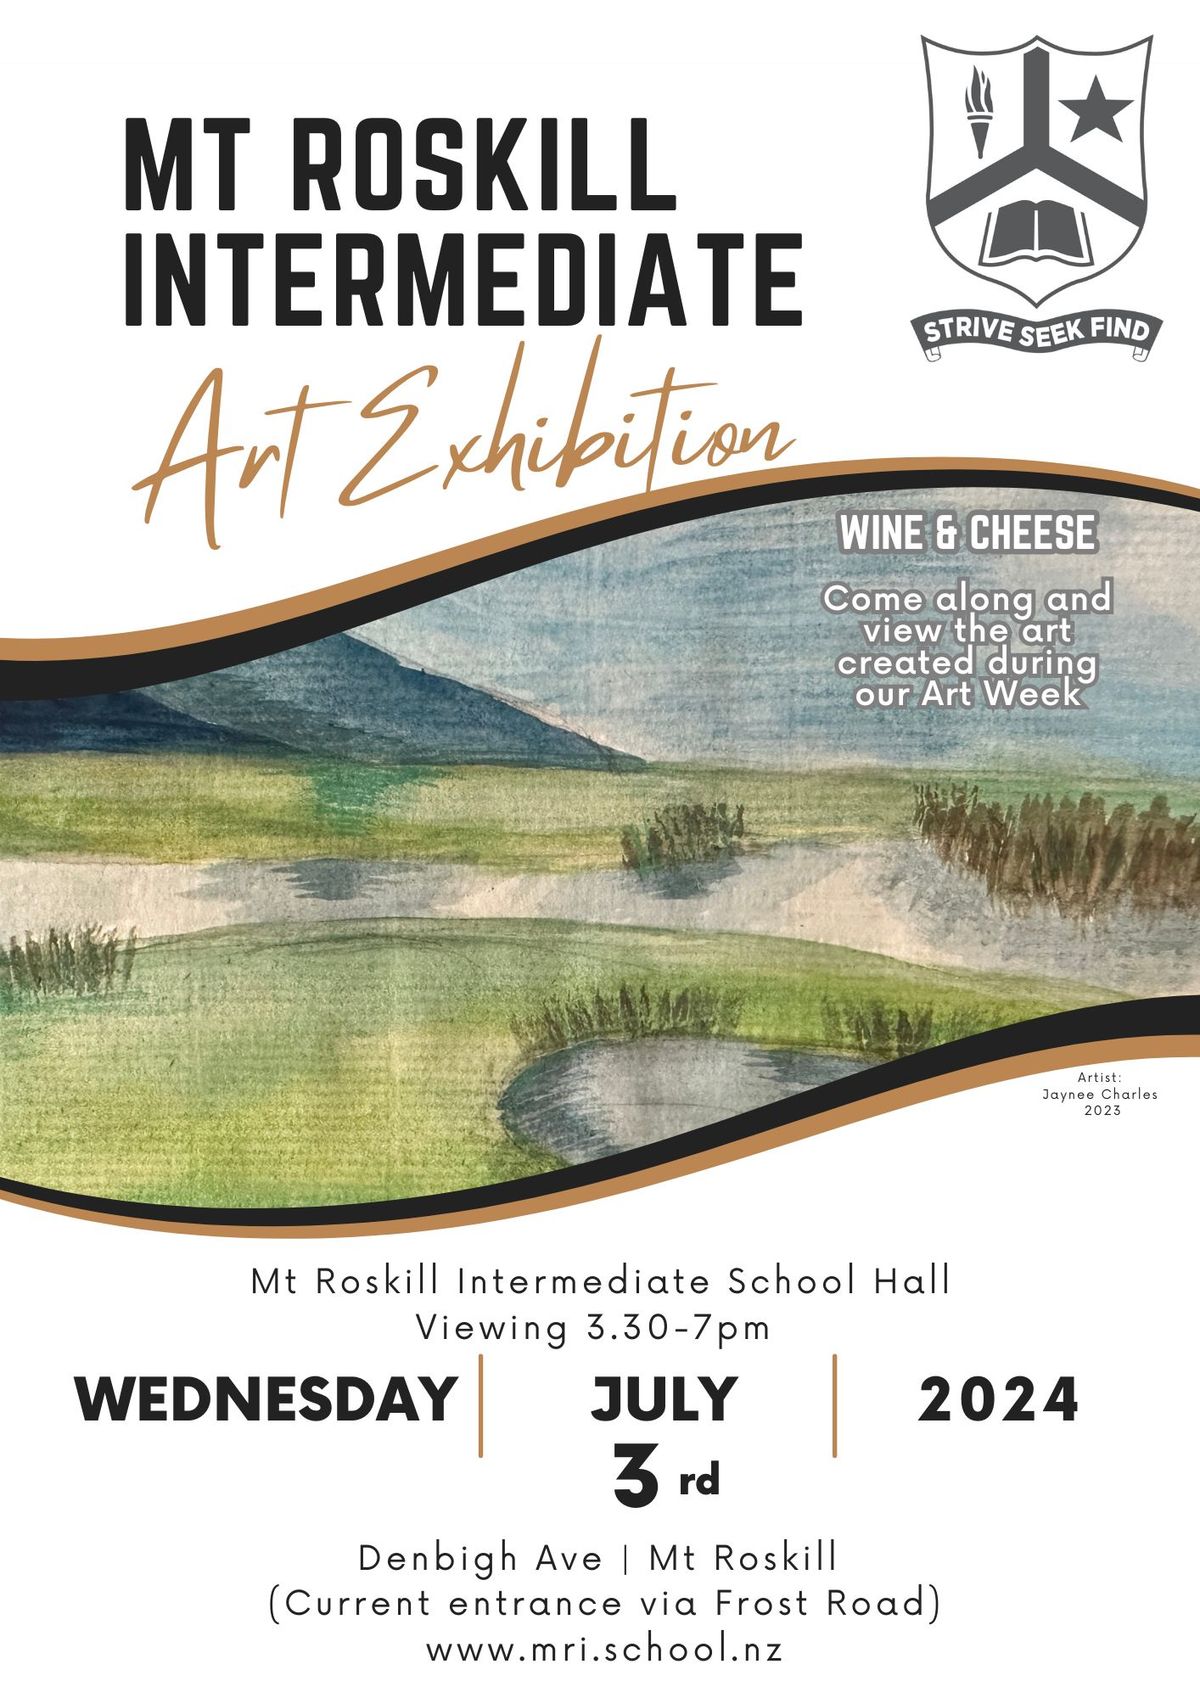 Mt Roskill Intermediate Art Exhibition - Wine & Cheese